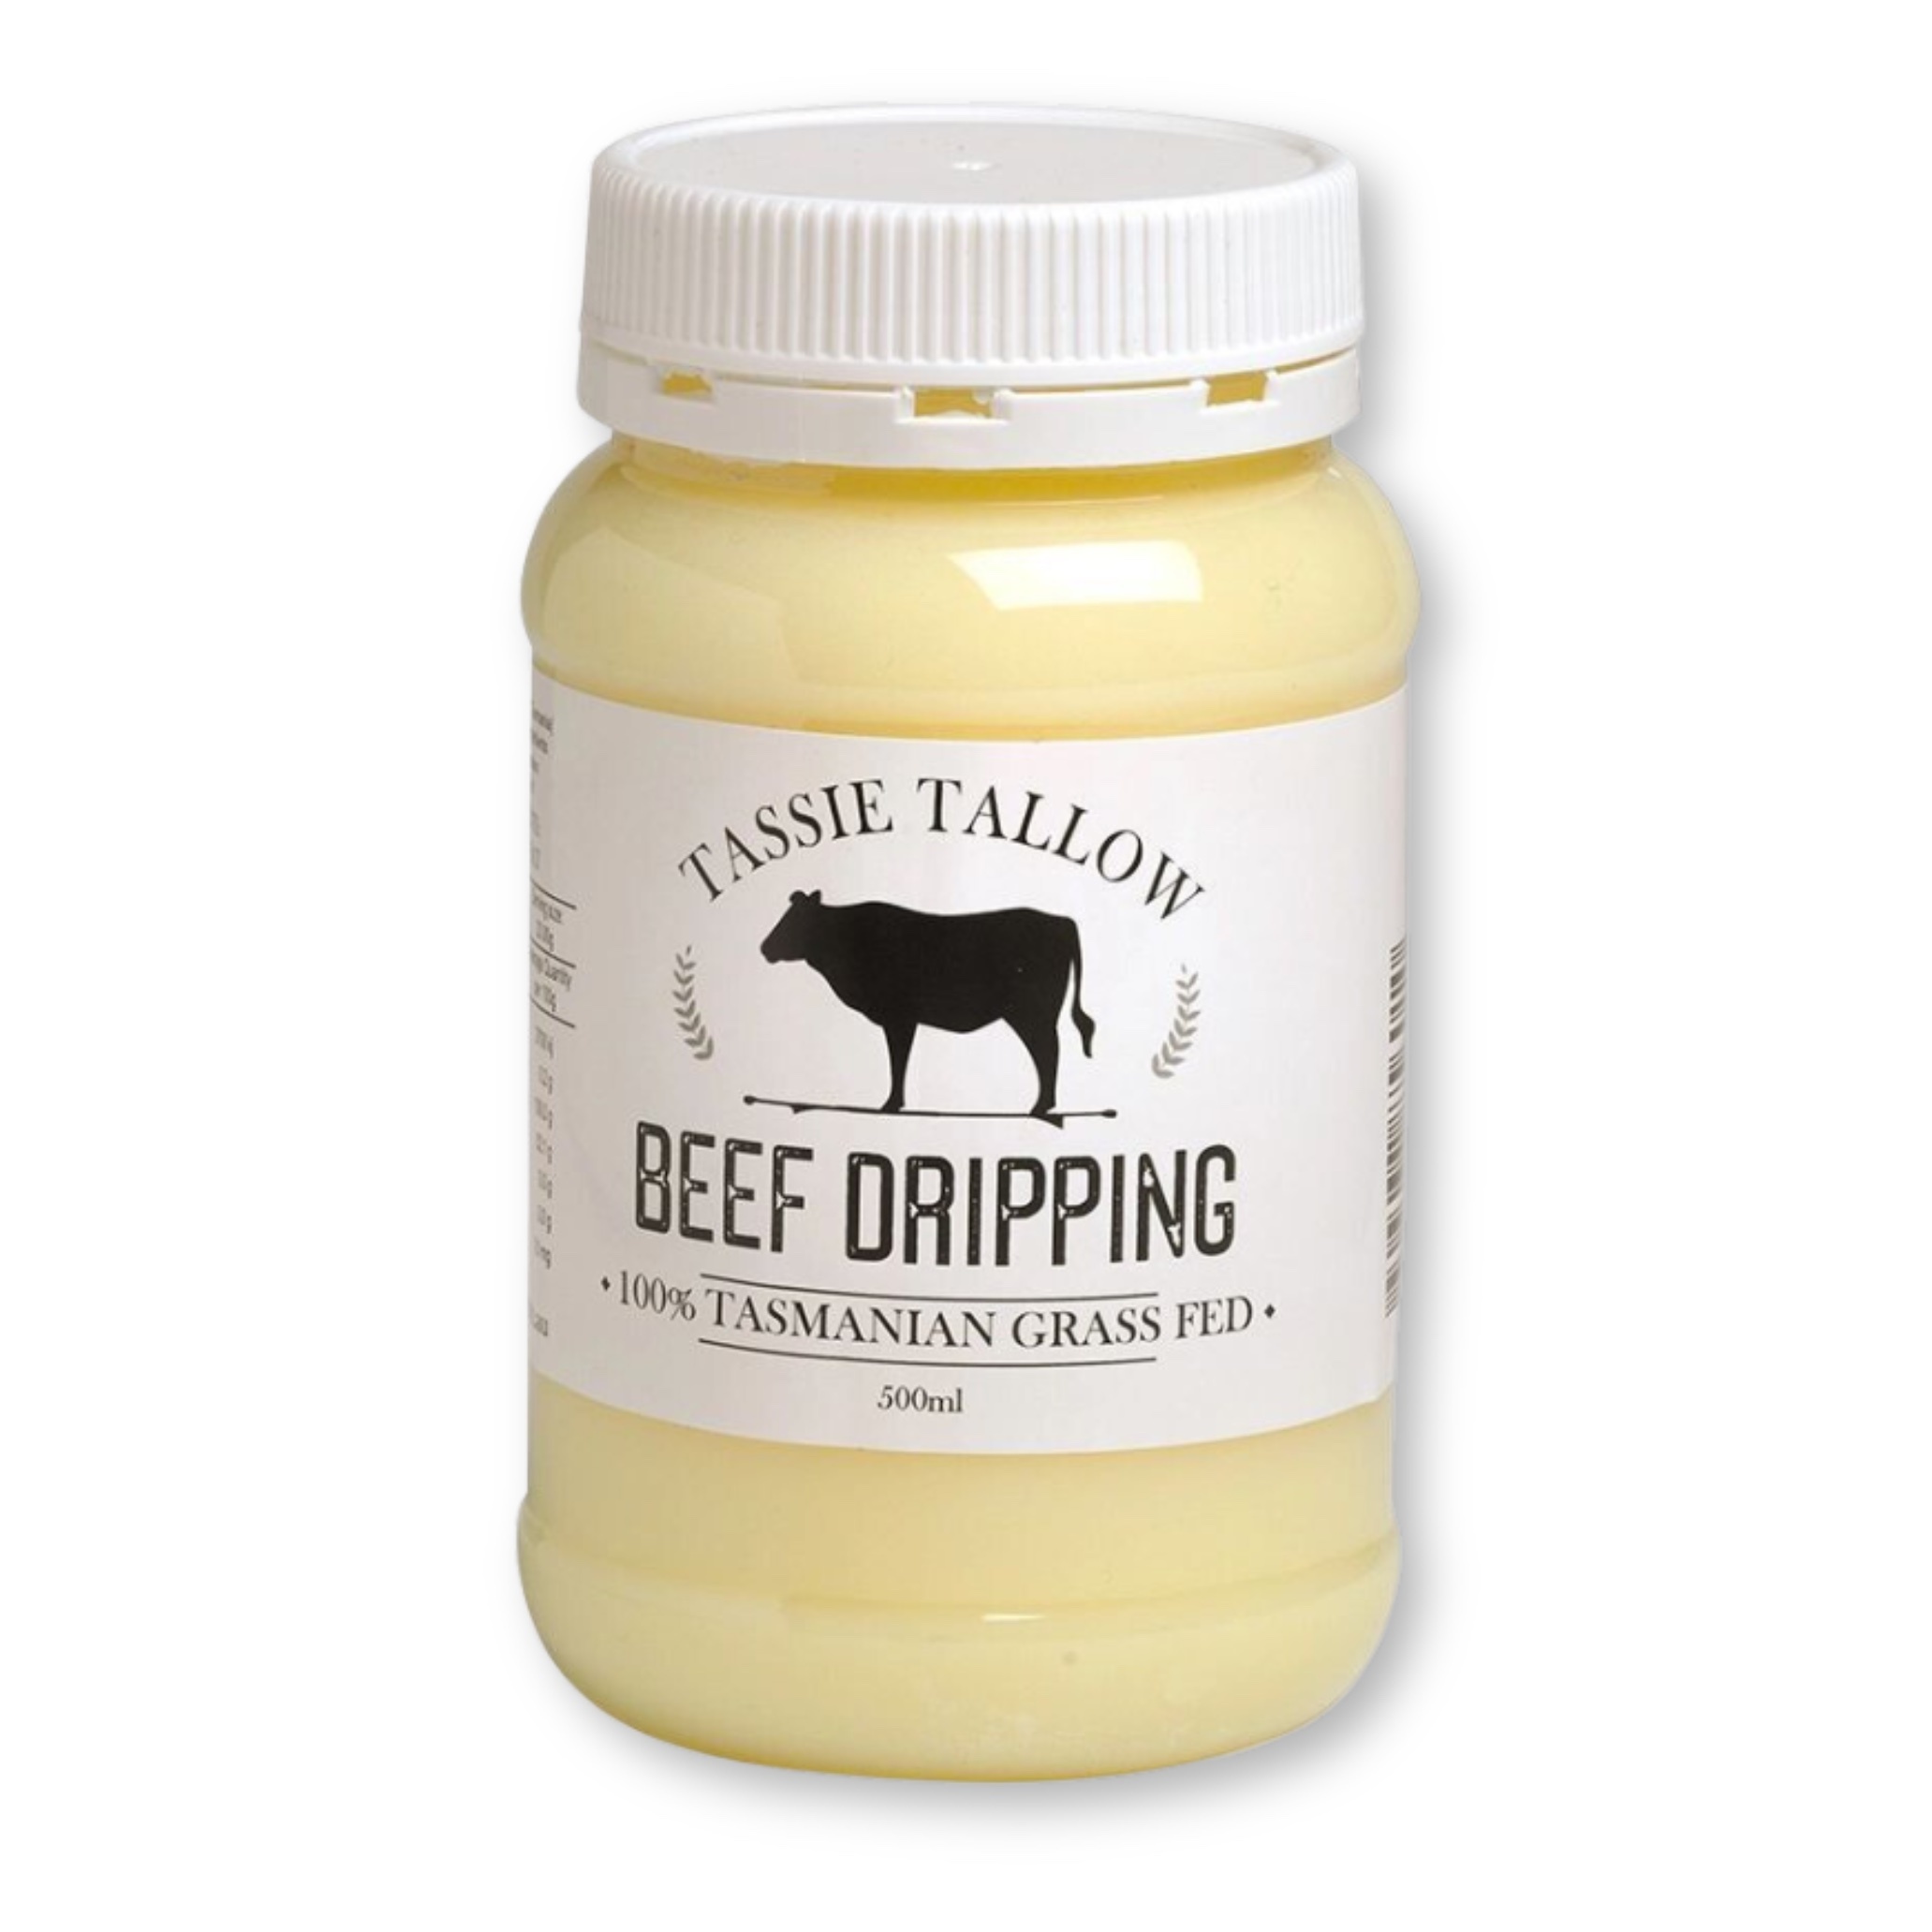 Tassie Tallow Beef Dripping 500ml